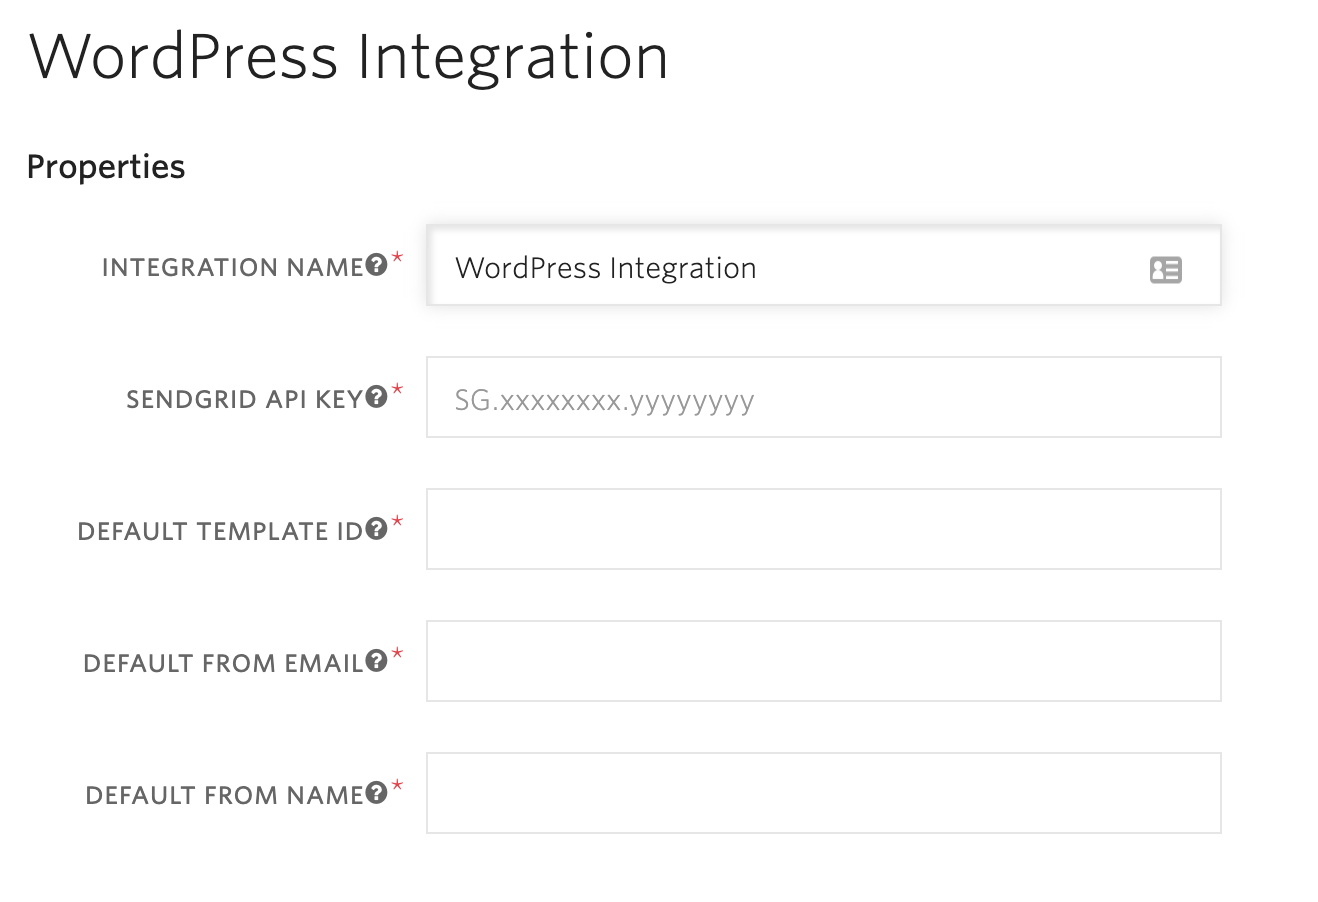 WordPress Integration details